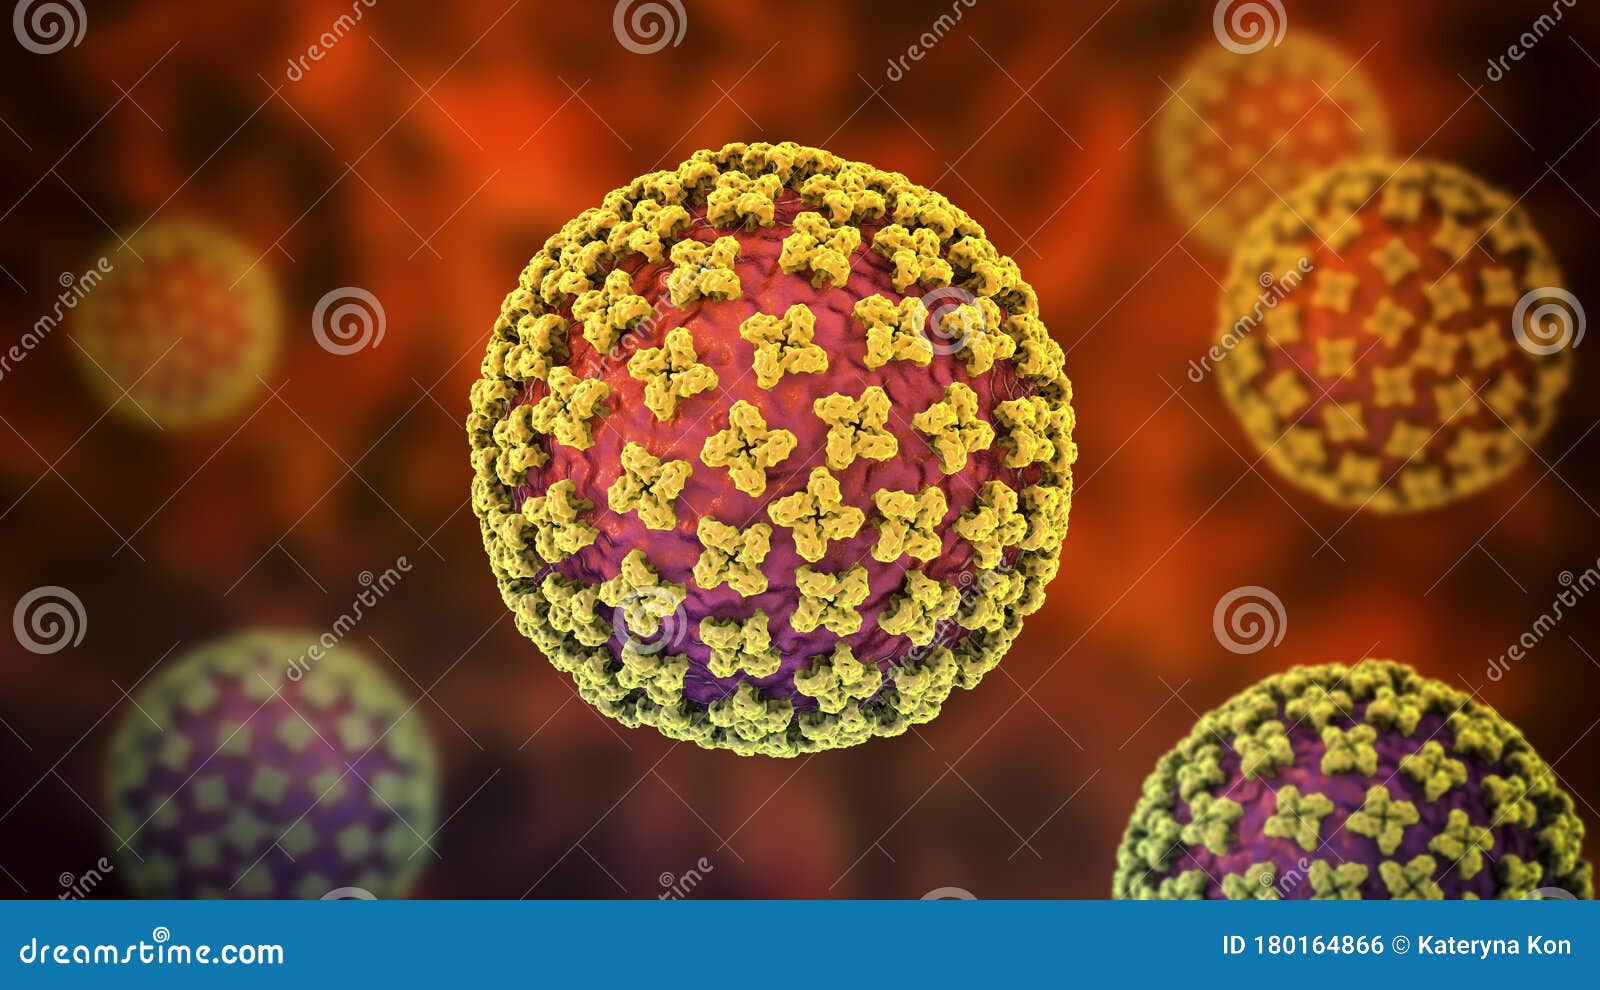 orthohantavirus that causes hantavirus hemorrhagic fever with renal syndrome